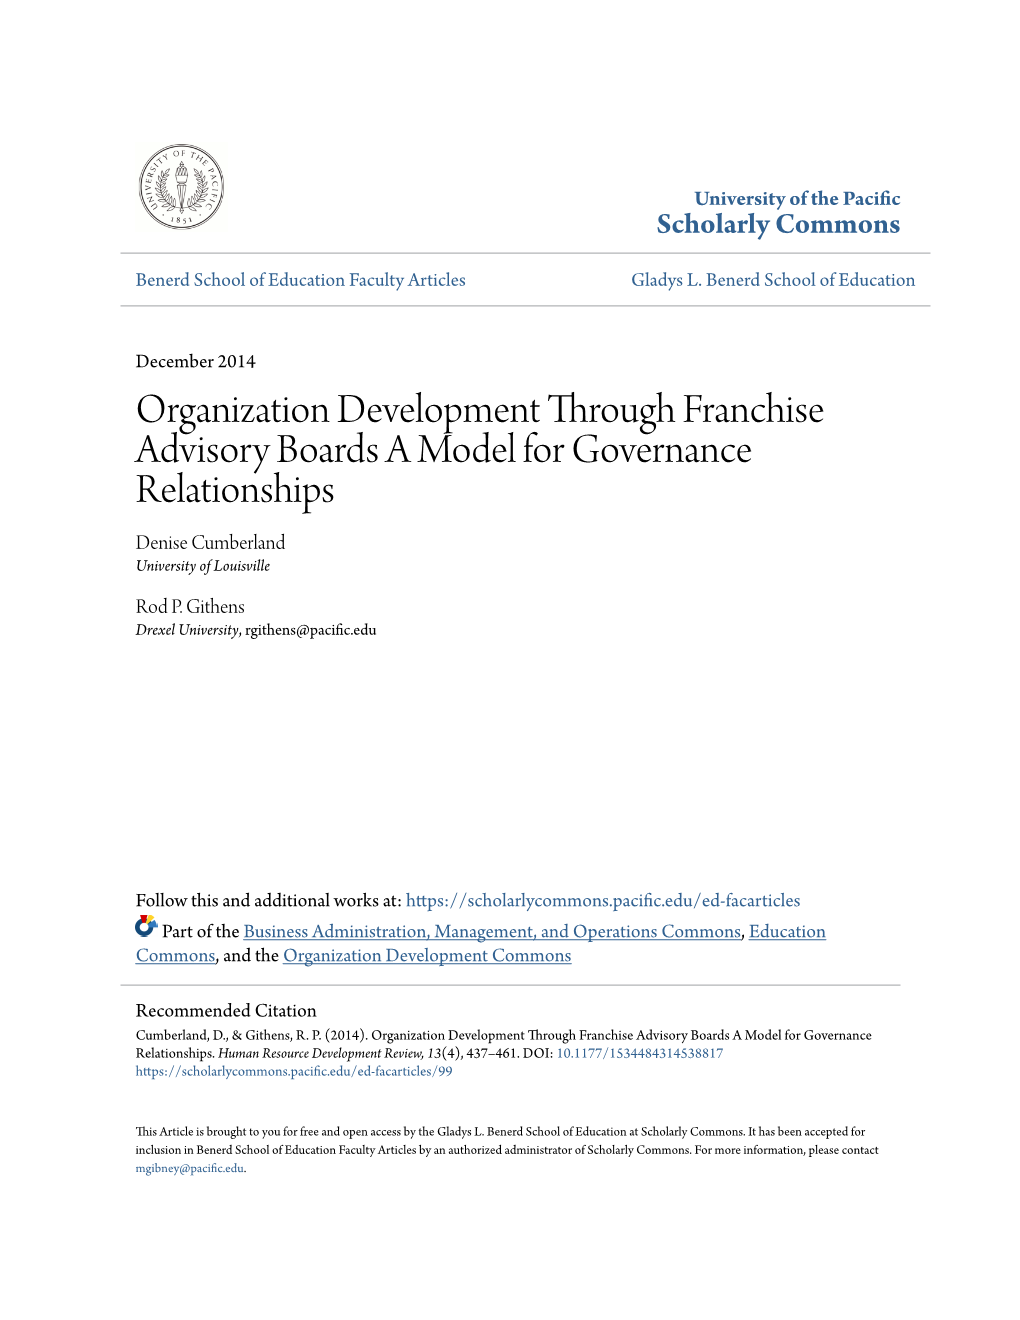 Organization Development Through Franchise Advisory Boards a Model for Governance Relationships Denise Cumberland University of Louisville